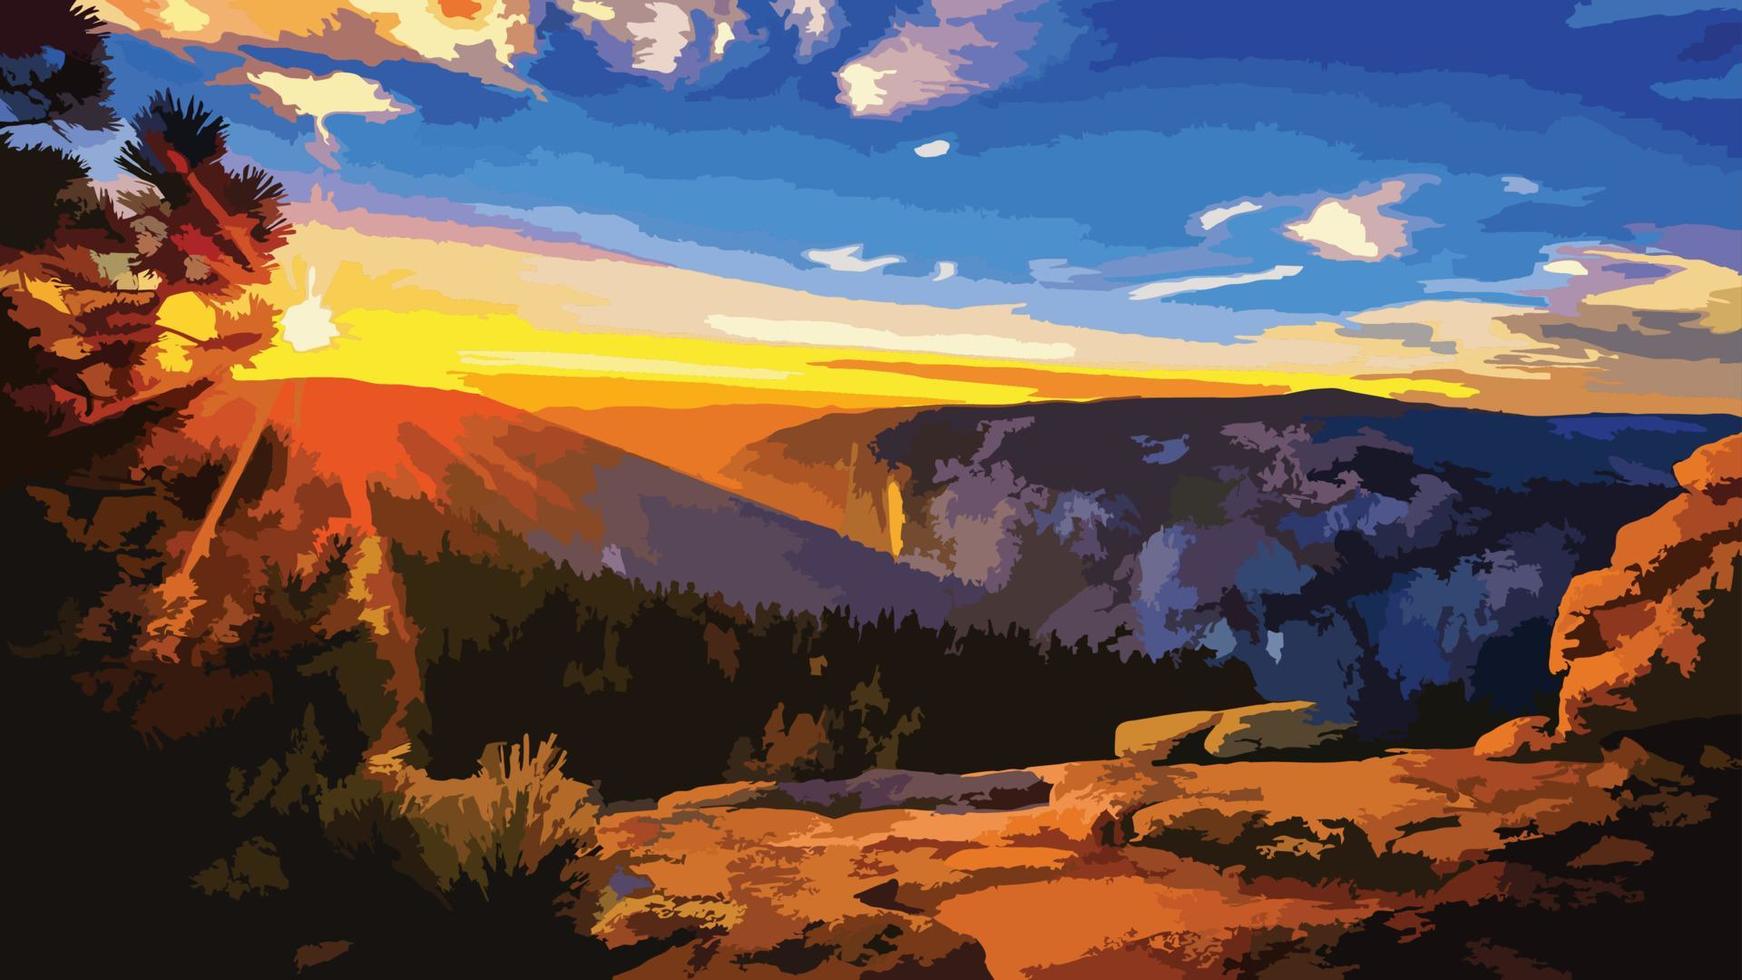 Mountain Sunrise Sunset Landscape Illustration. Hand draw illustration vector